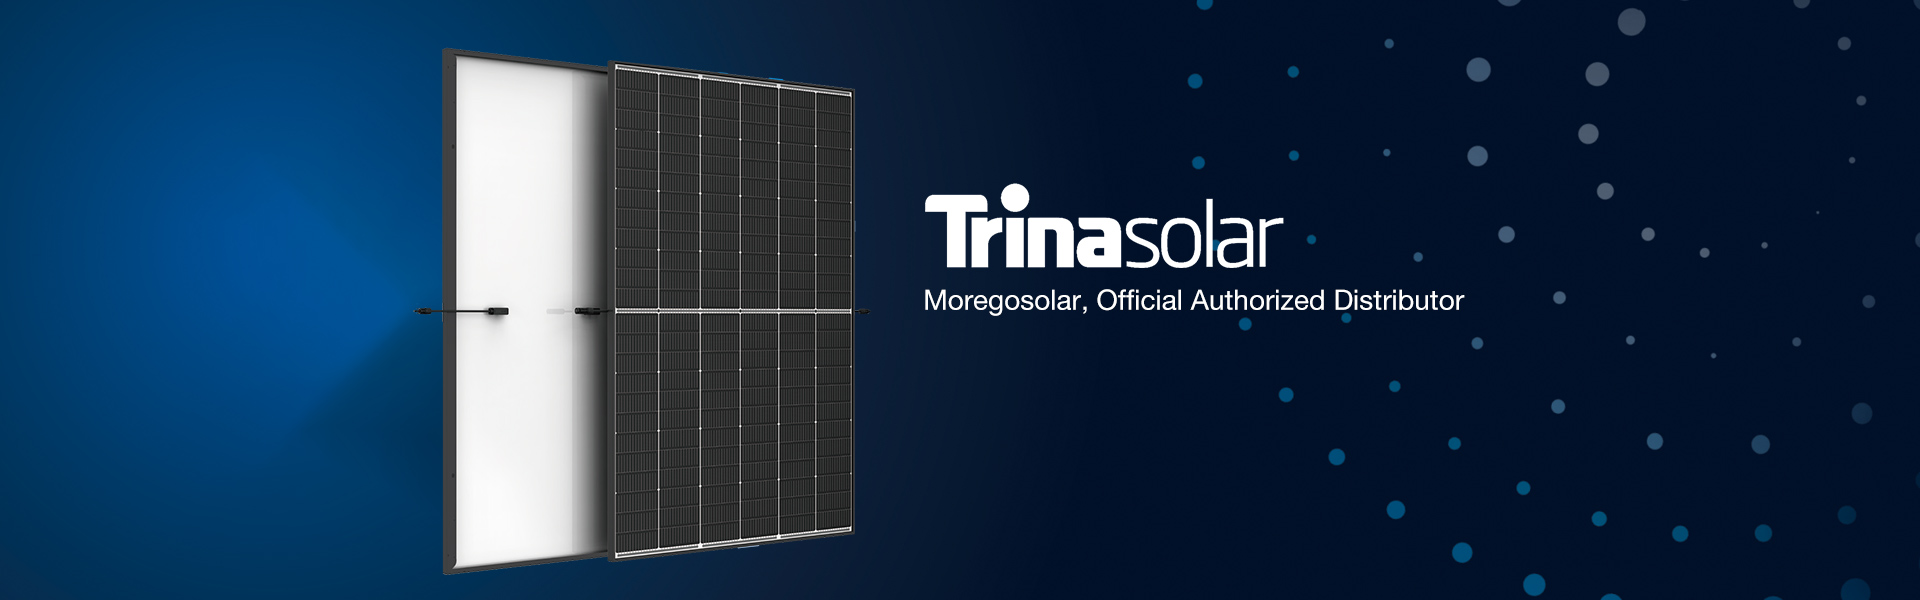 Trina solar Vertex S 450w